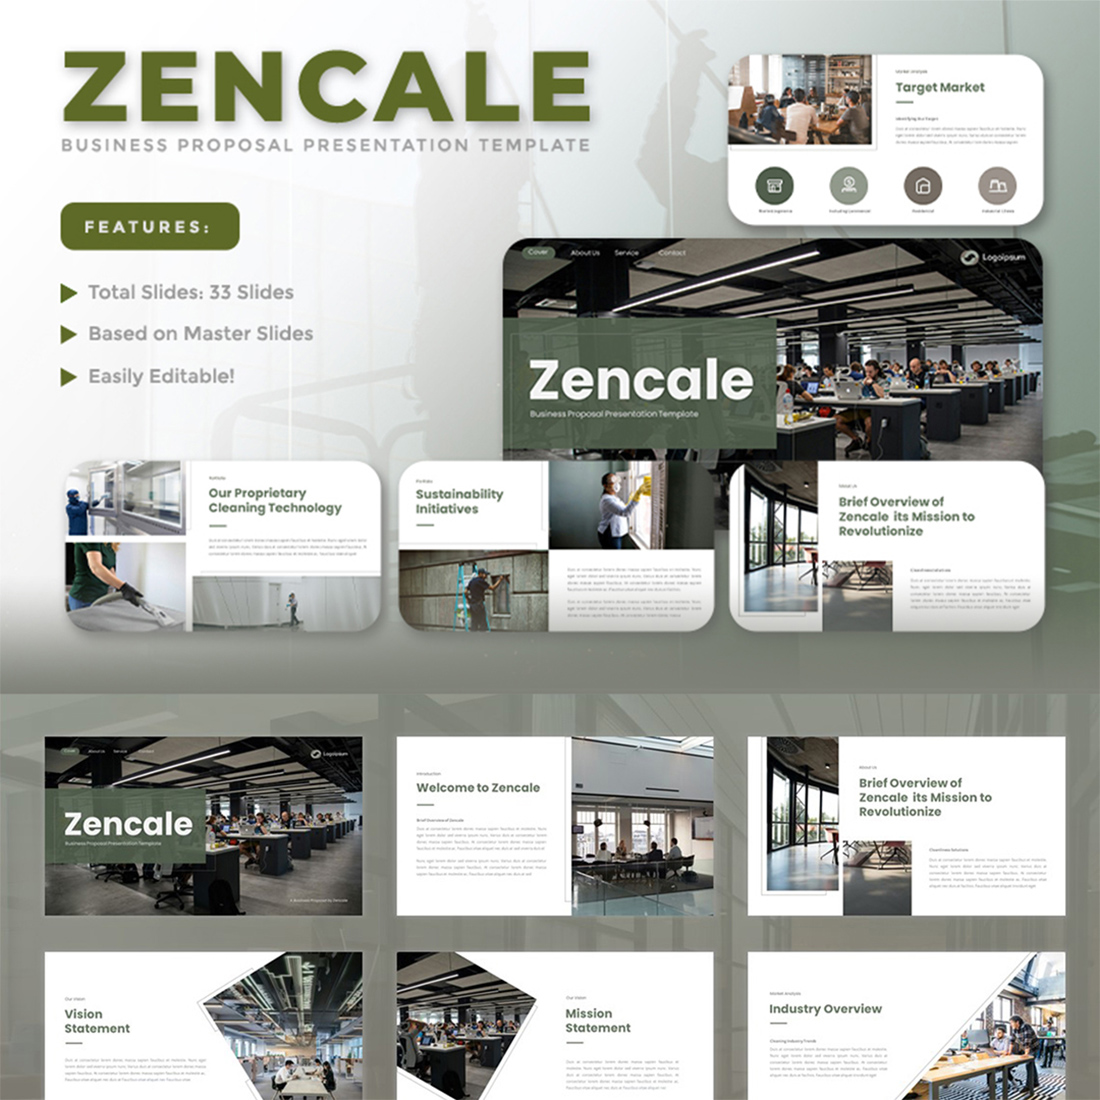 Zencale - Business Proposal Google Slides Template cover image.